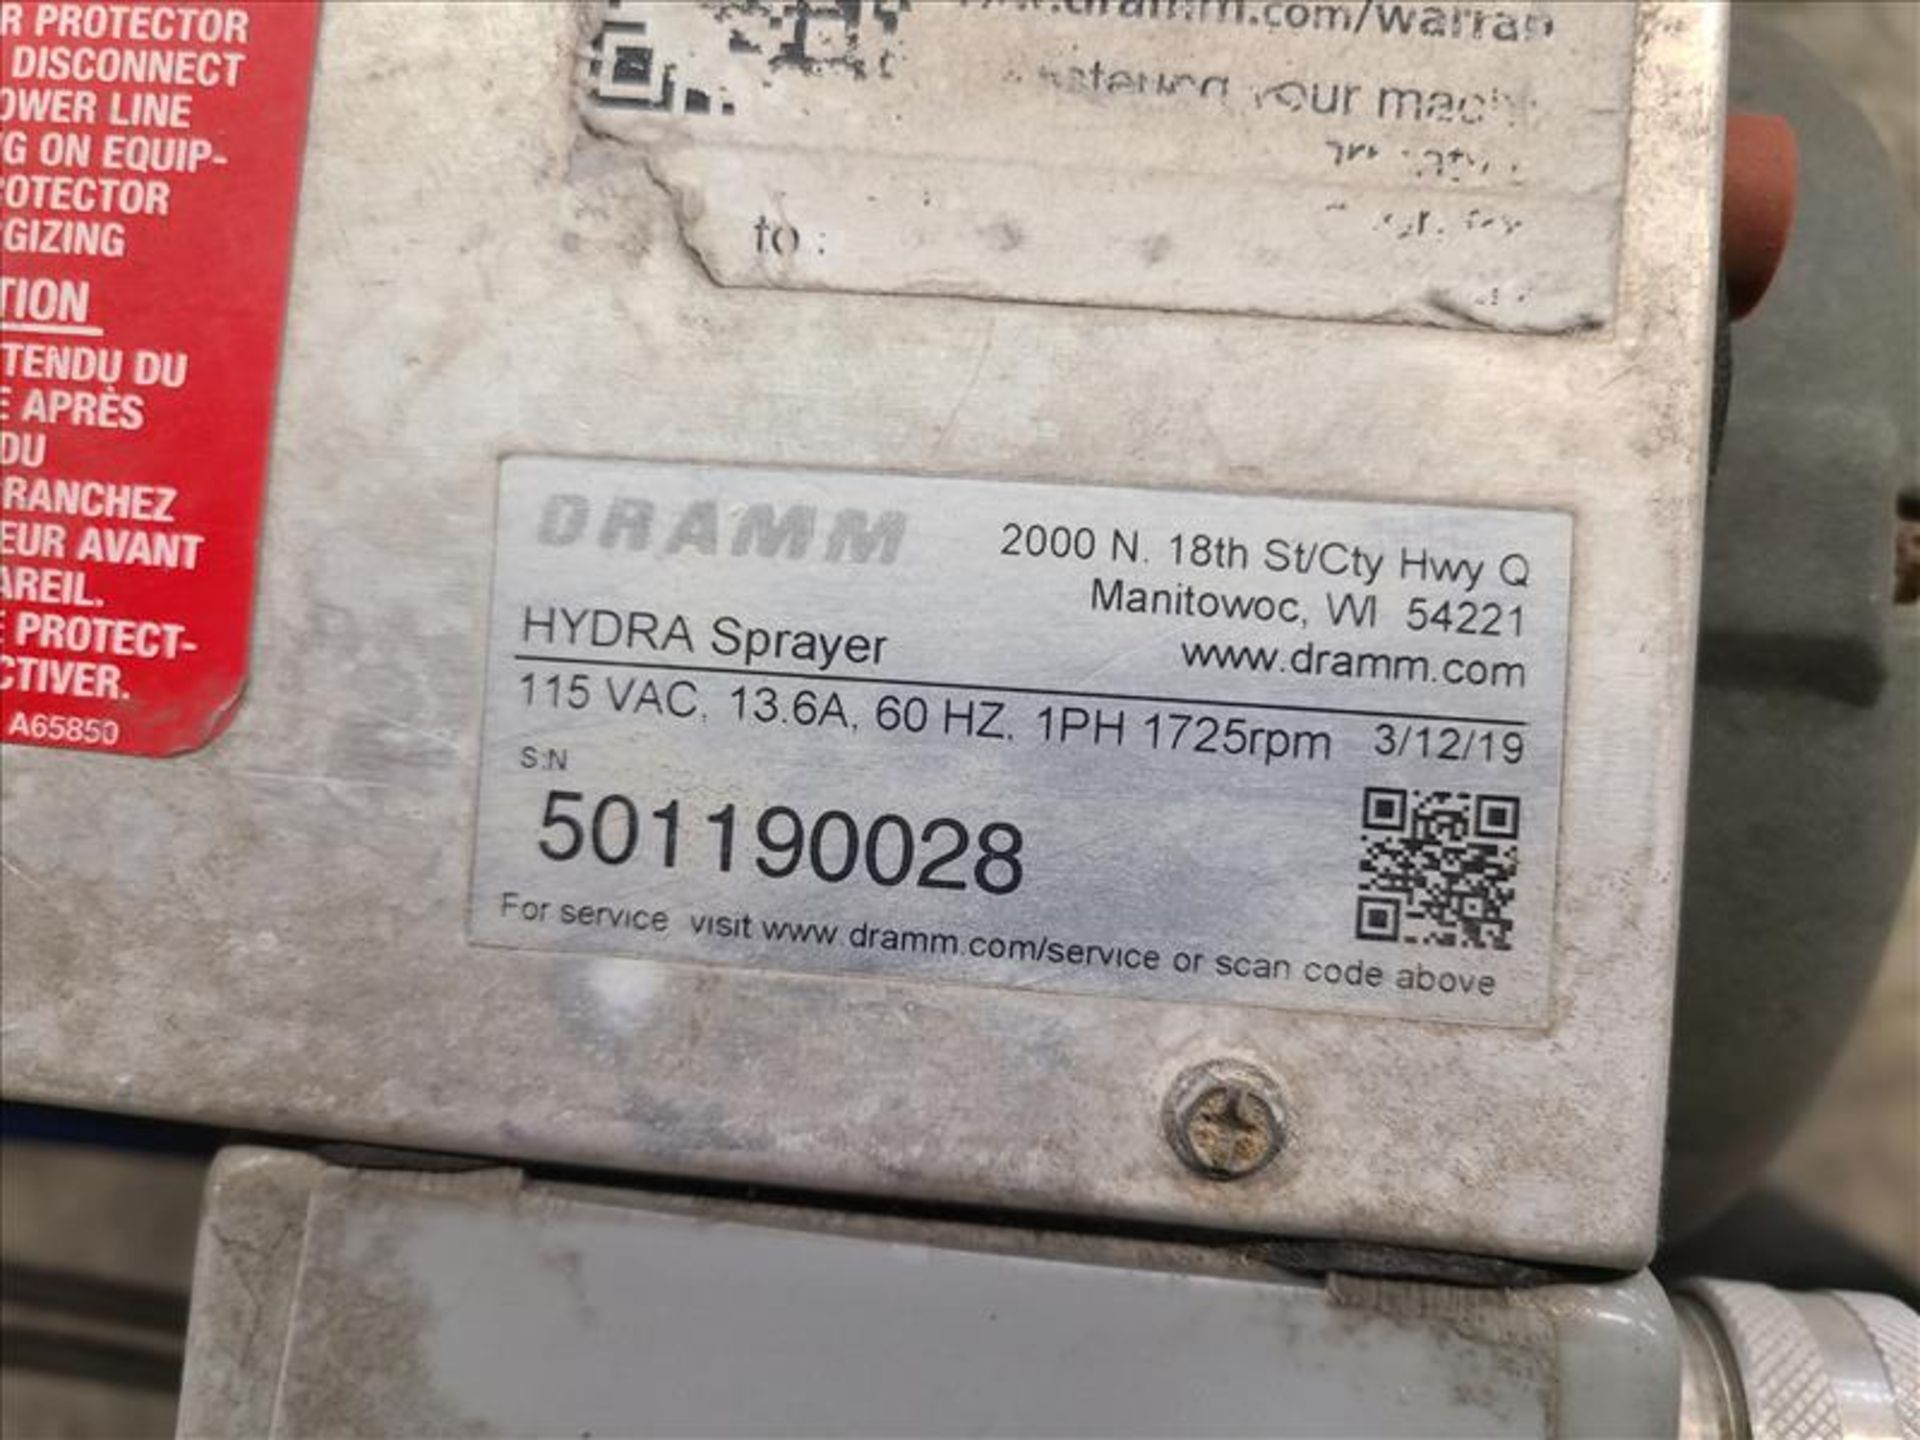 Dramm sprayer, mod. Hydra, ser. no. 501190028, 1.5 hp, 50 gal. cap. - Image 3 of 4